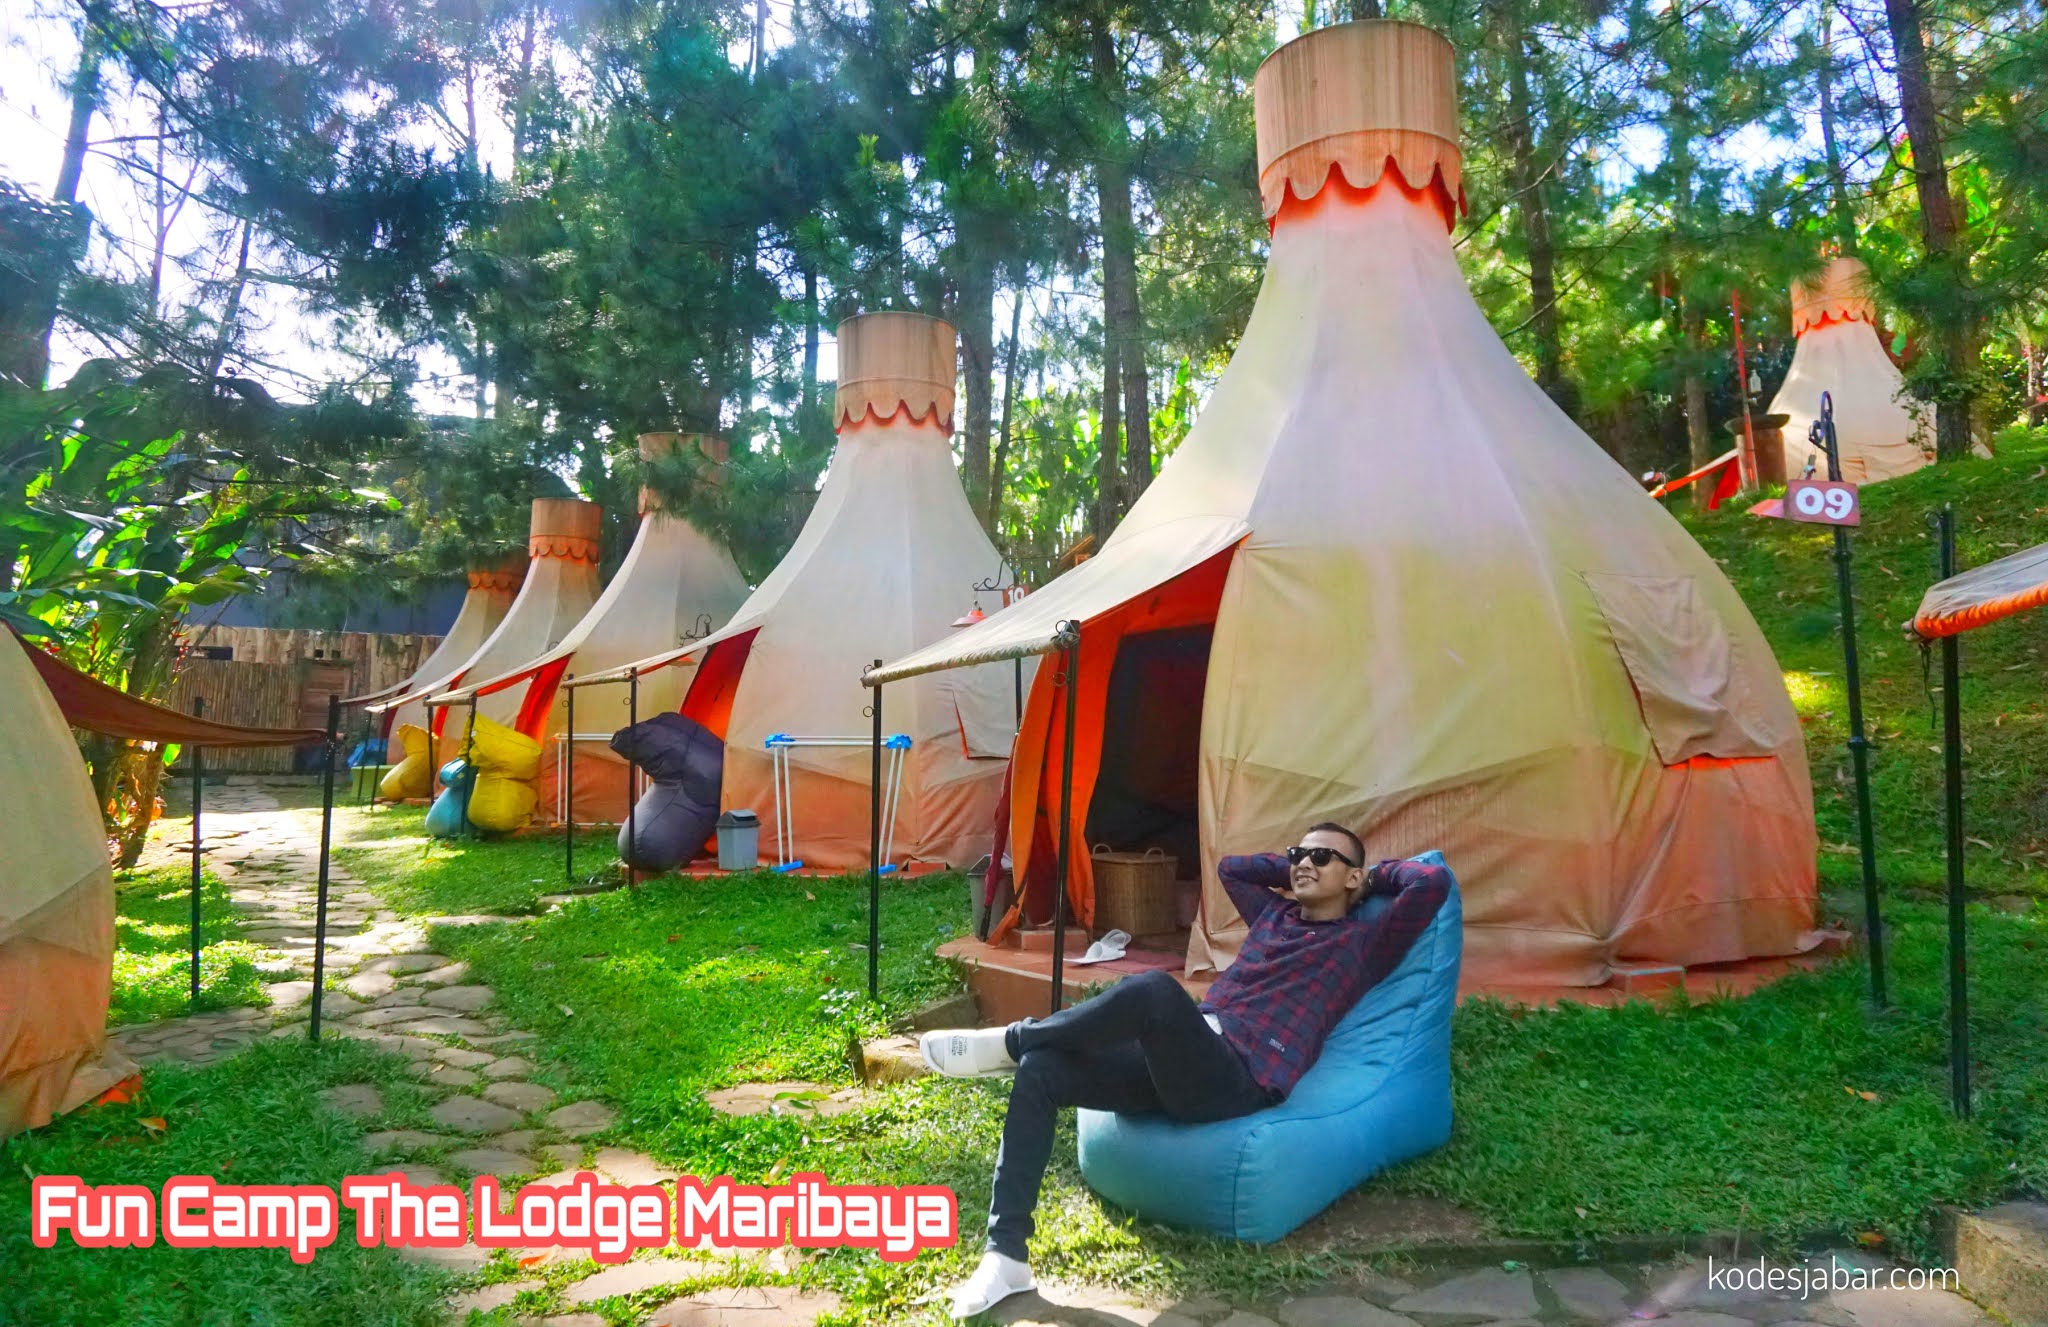 Camping Ceria di The Lodge Maribaya Bandung